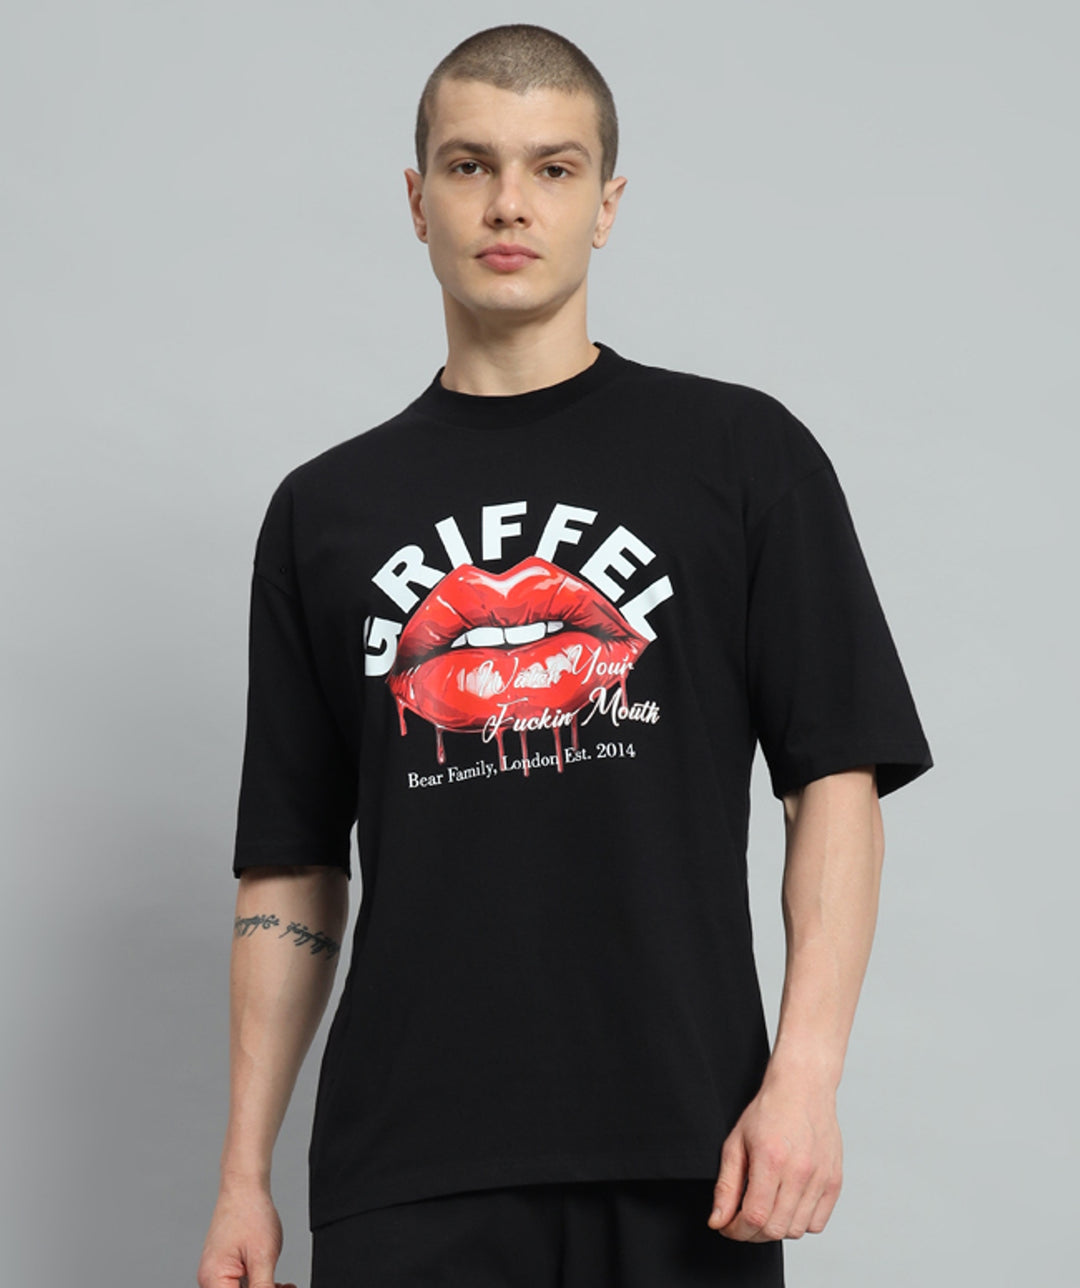 GRIFFEL Black Oversized T-Shirt